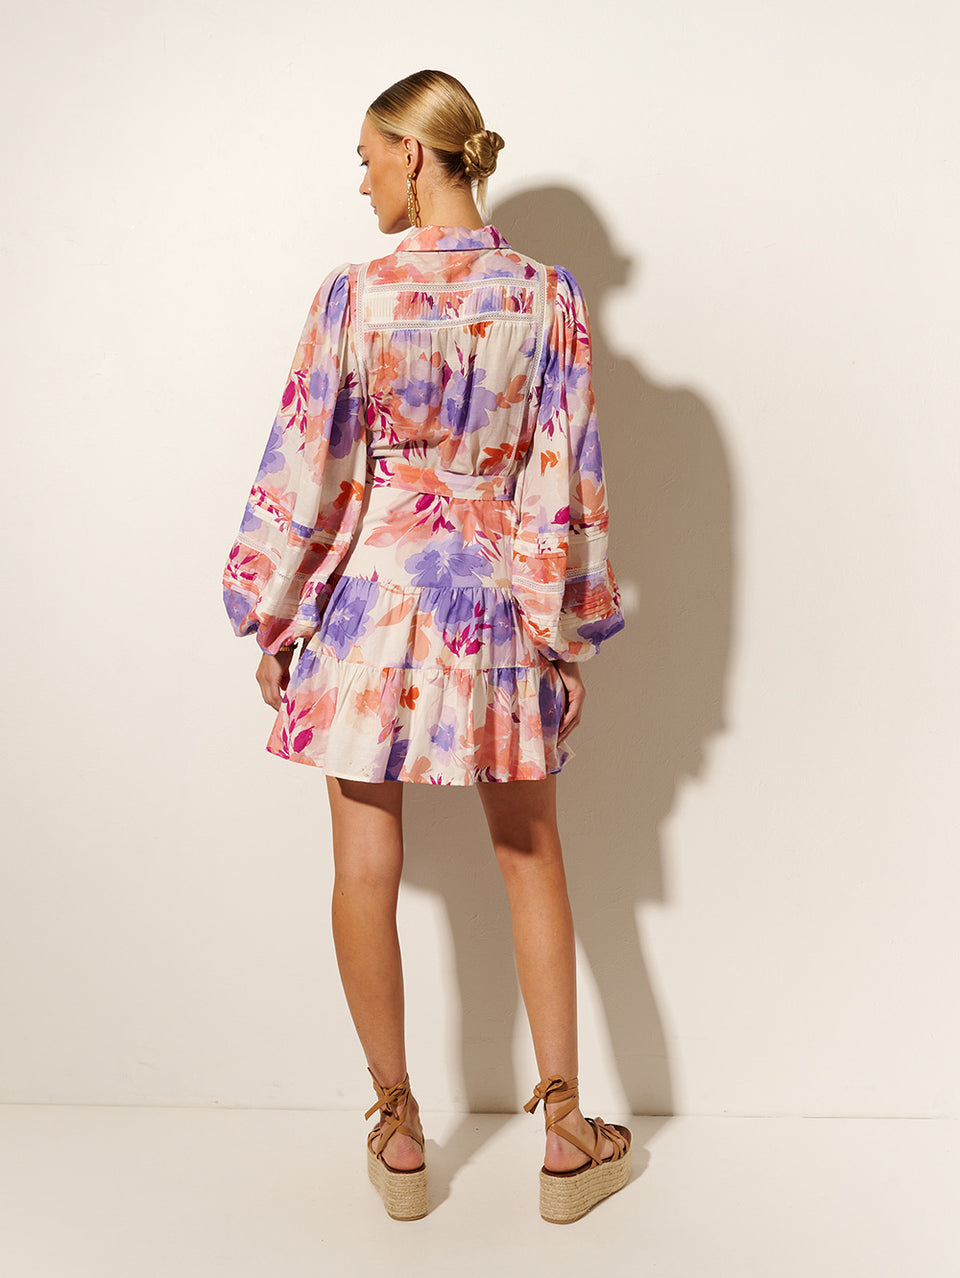 Johannes Mini Dress KIVARI | Model wears floral mini dress back view